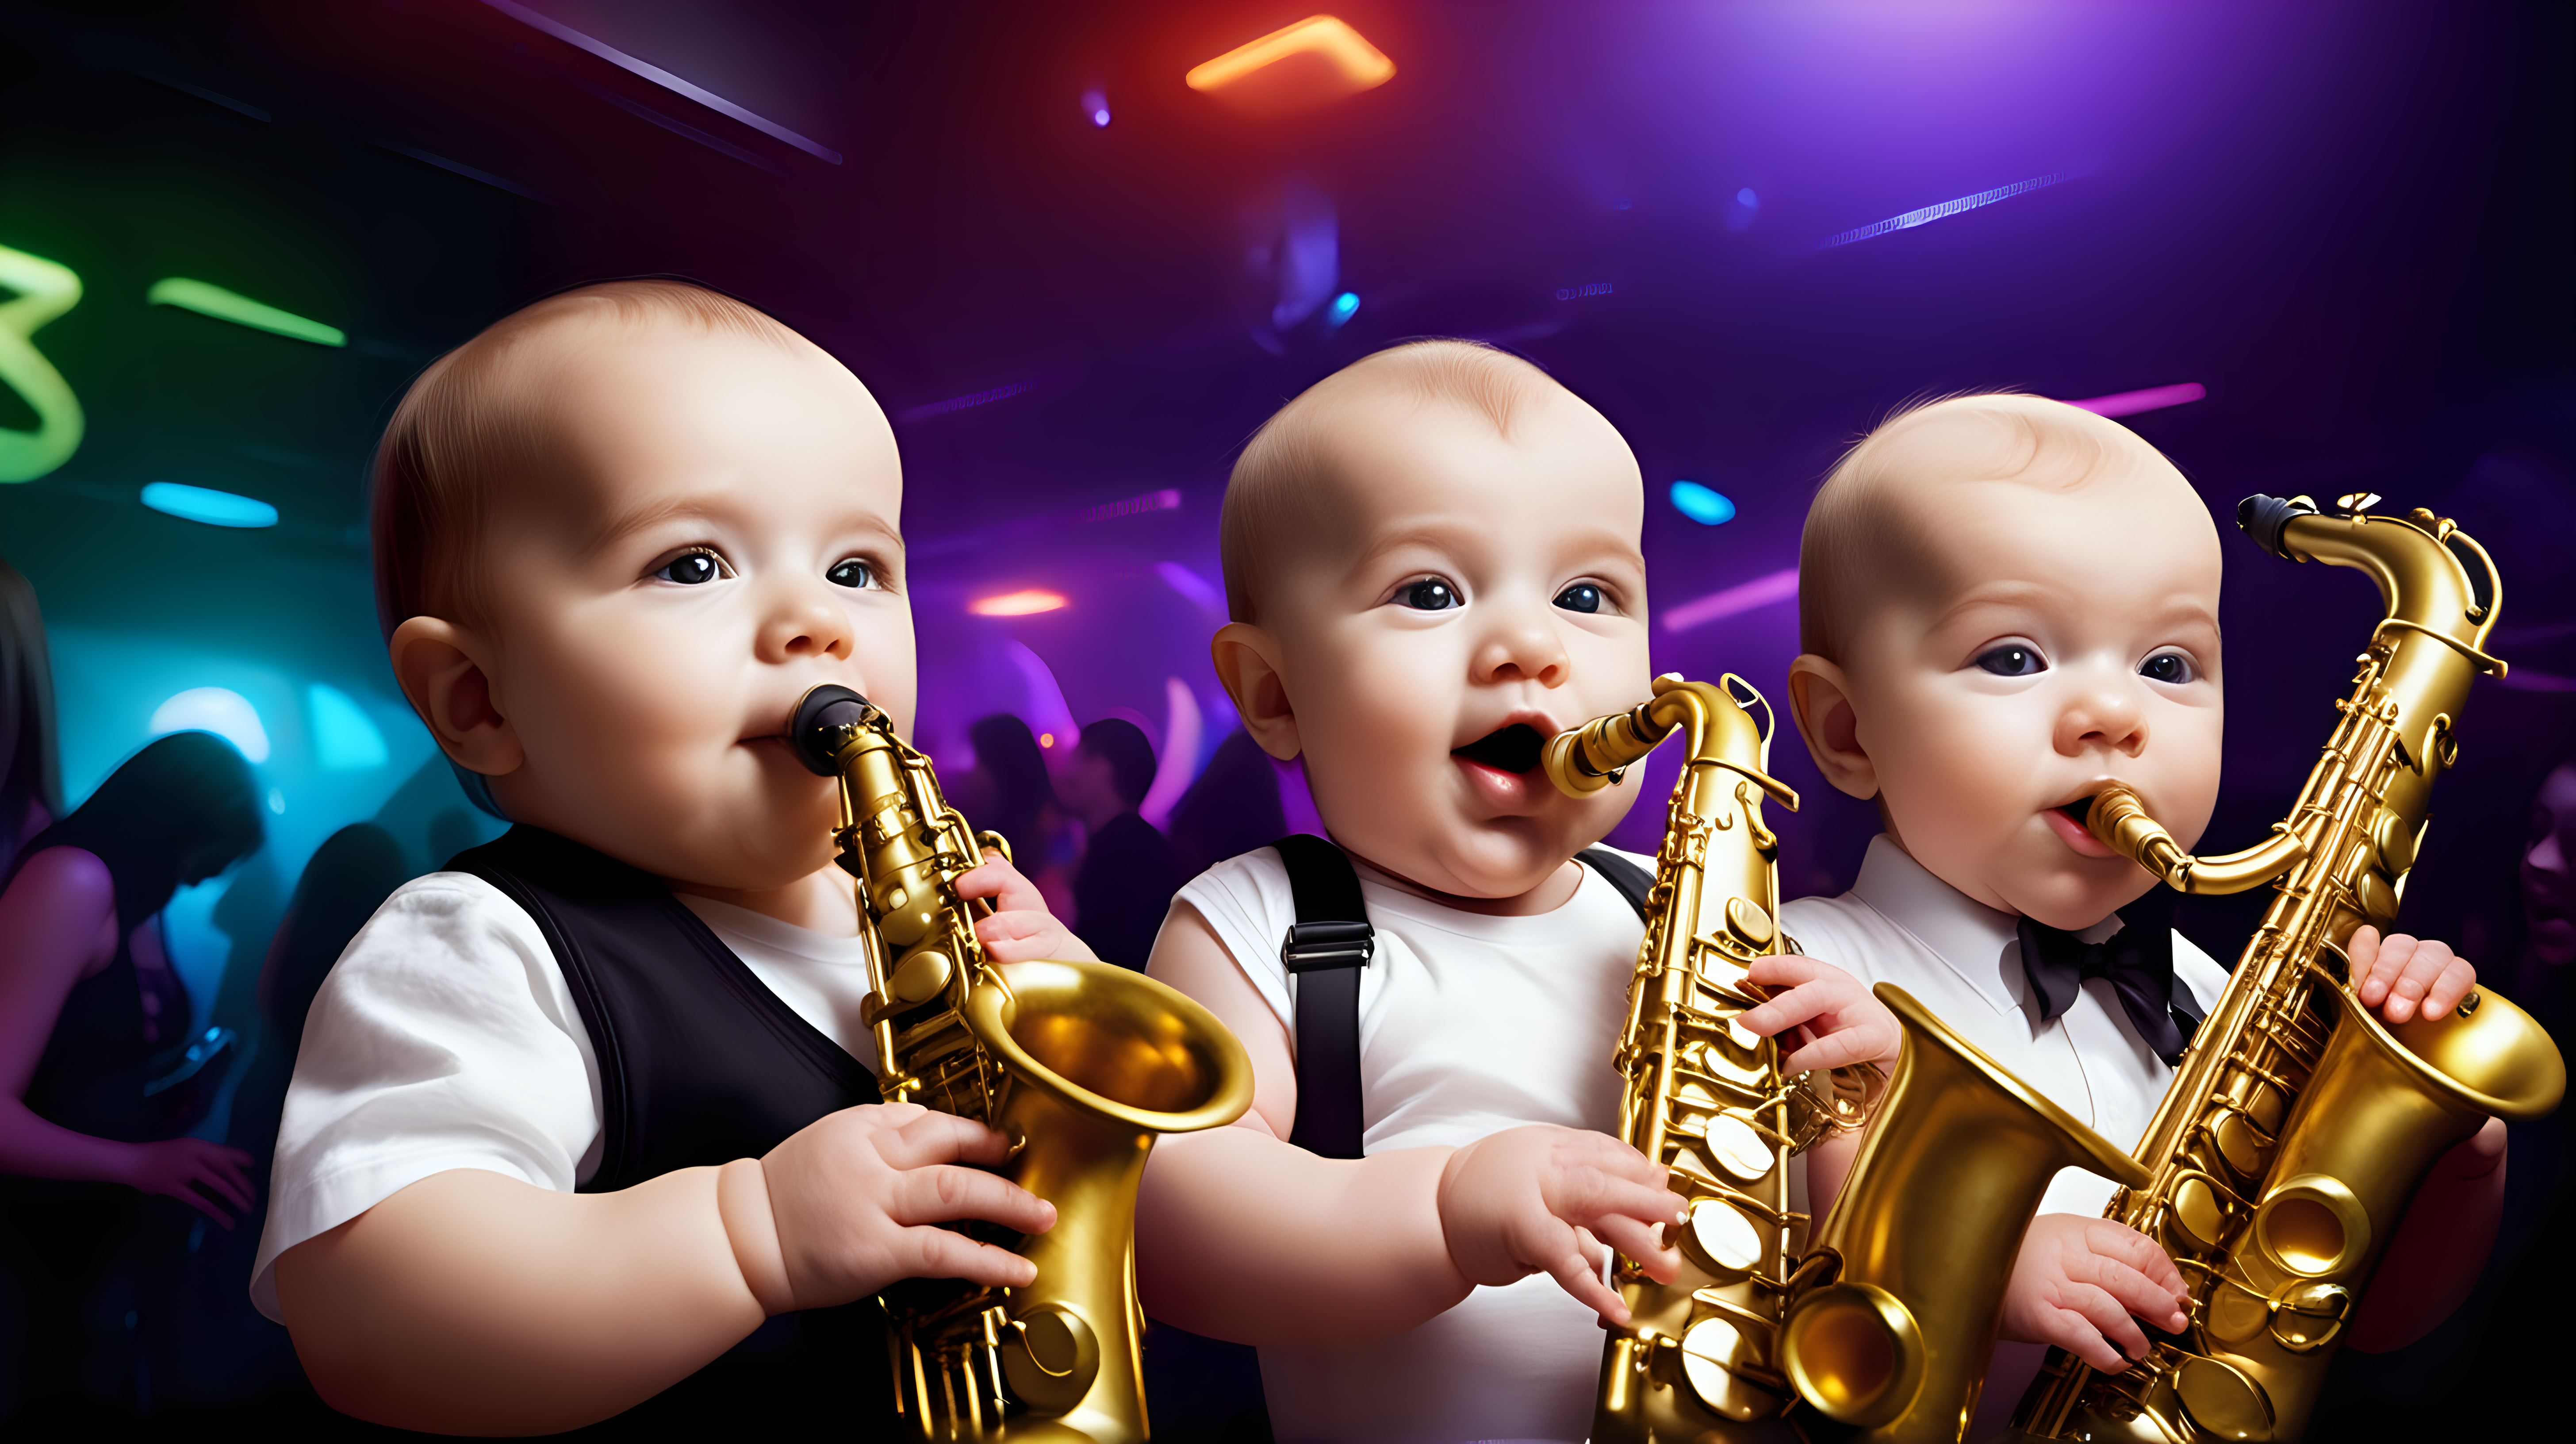 babies playing saxophones in a nightclub